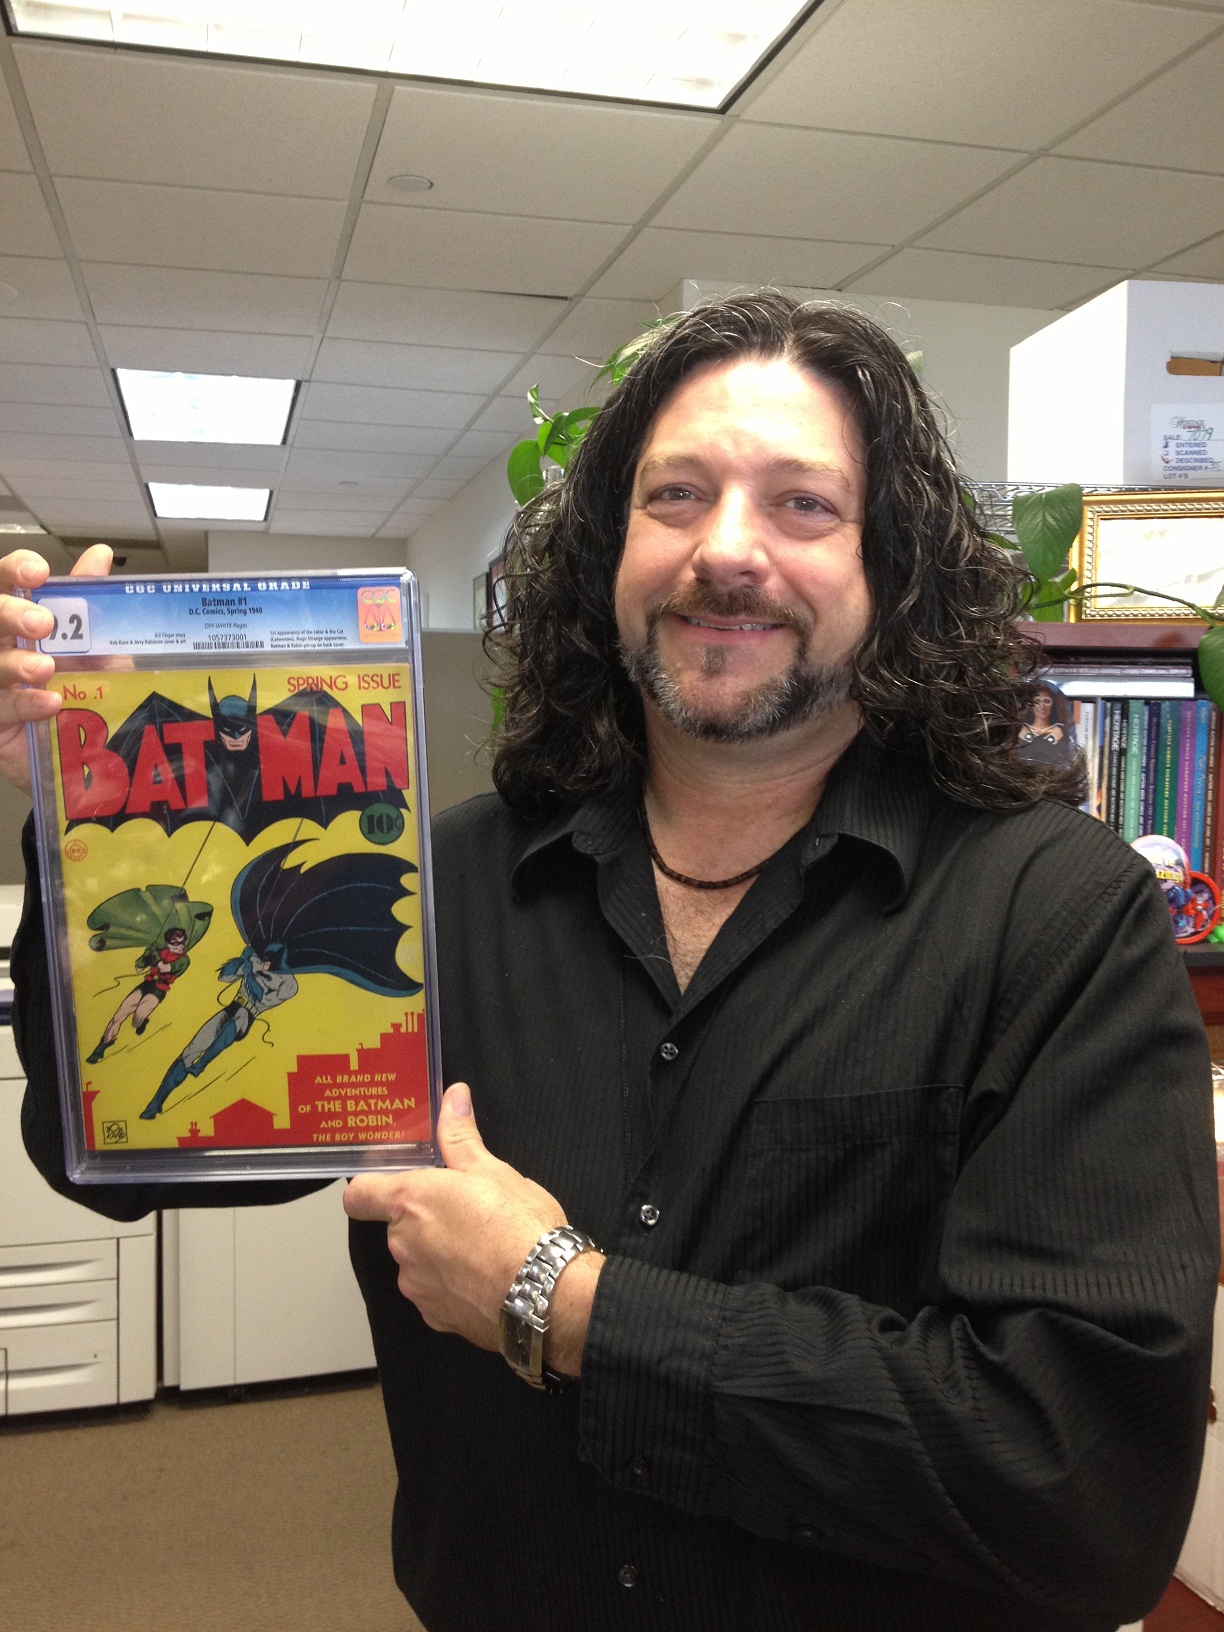 Greg with a $567,000 copy of Batman #1